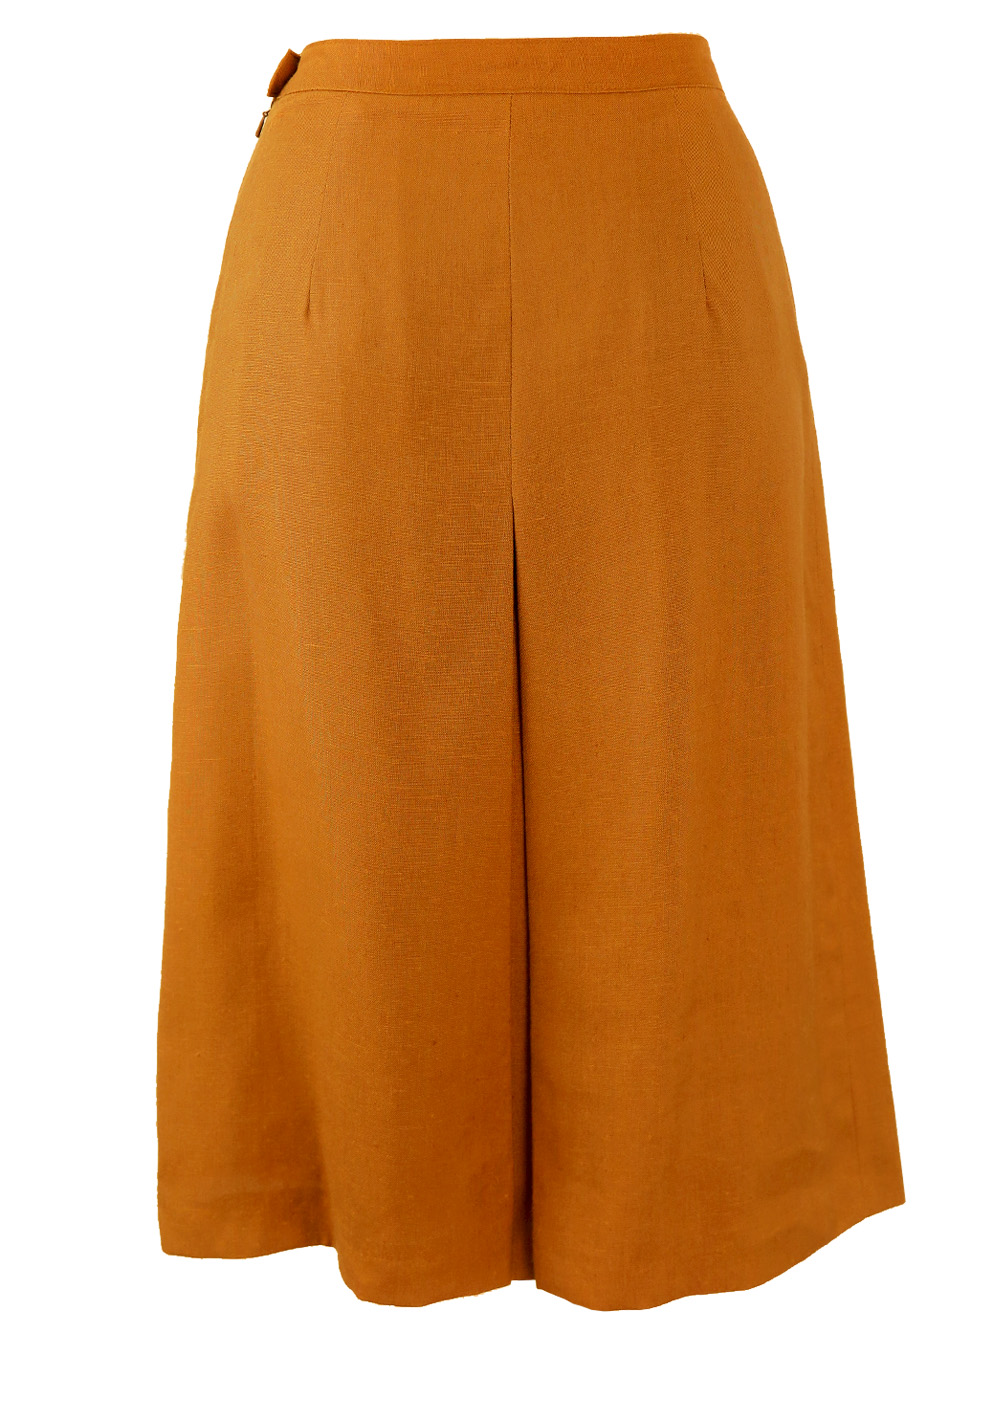 New/Deadstock Midi Length Brown A Line Skirt - S | Reign Vintage